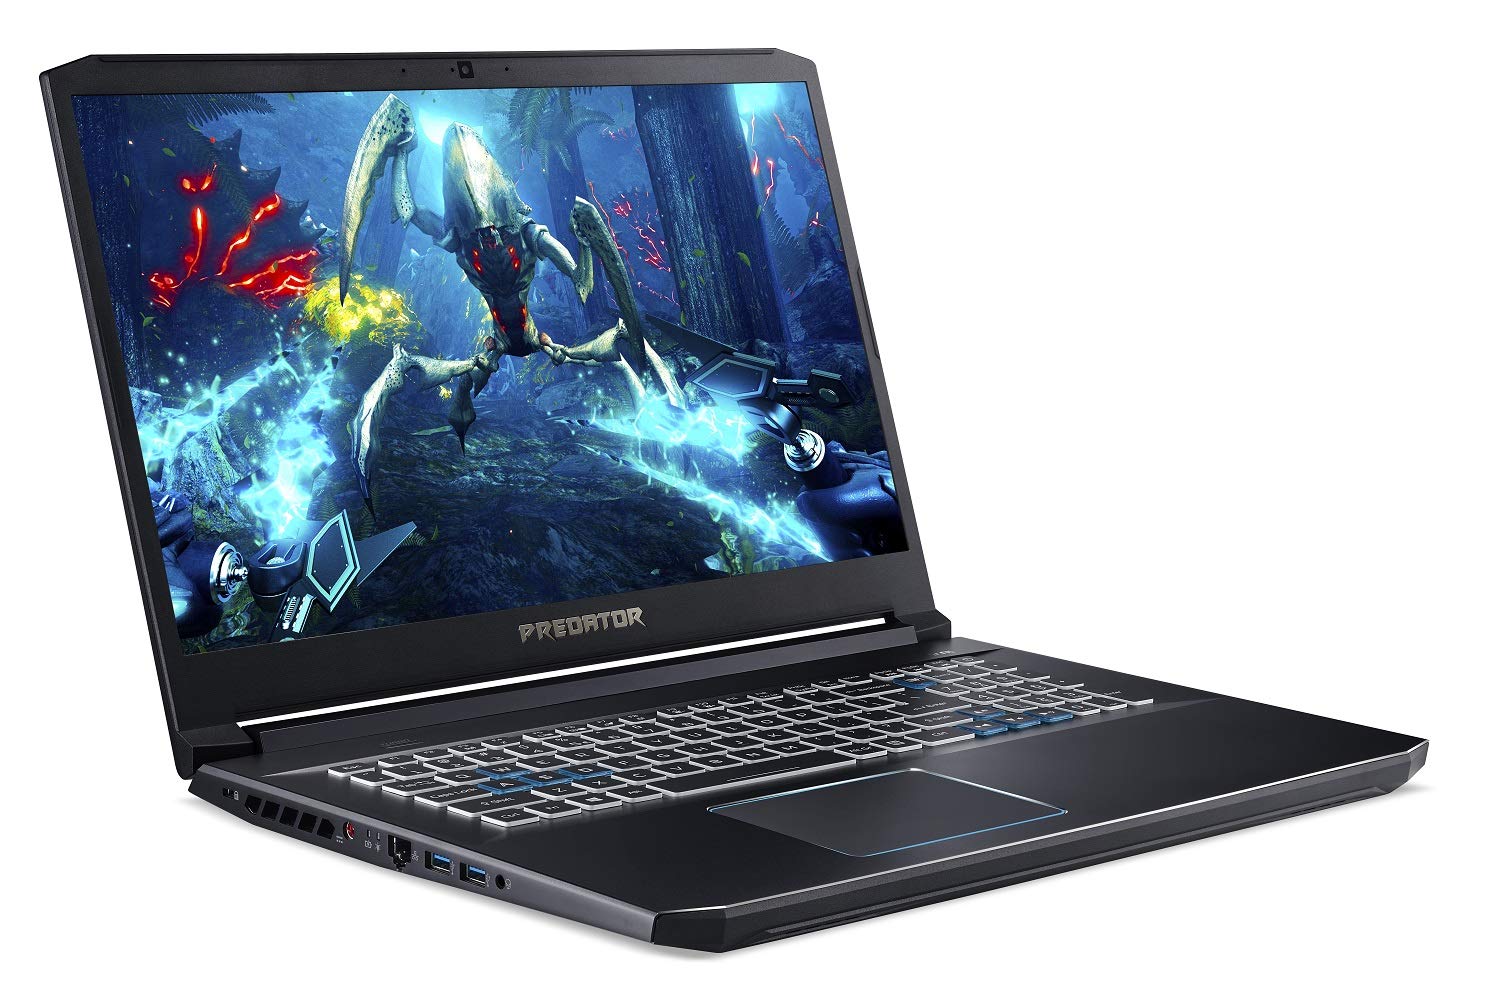 Acer Predator Helios 300 Gaming Laptop PC, 17.3